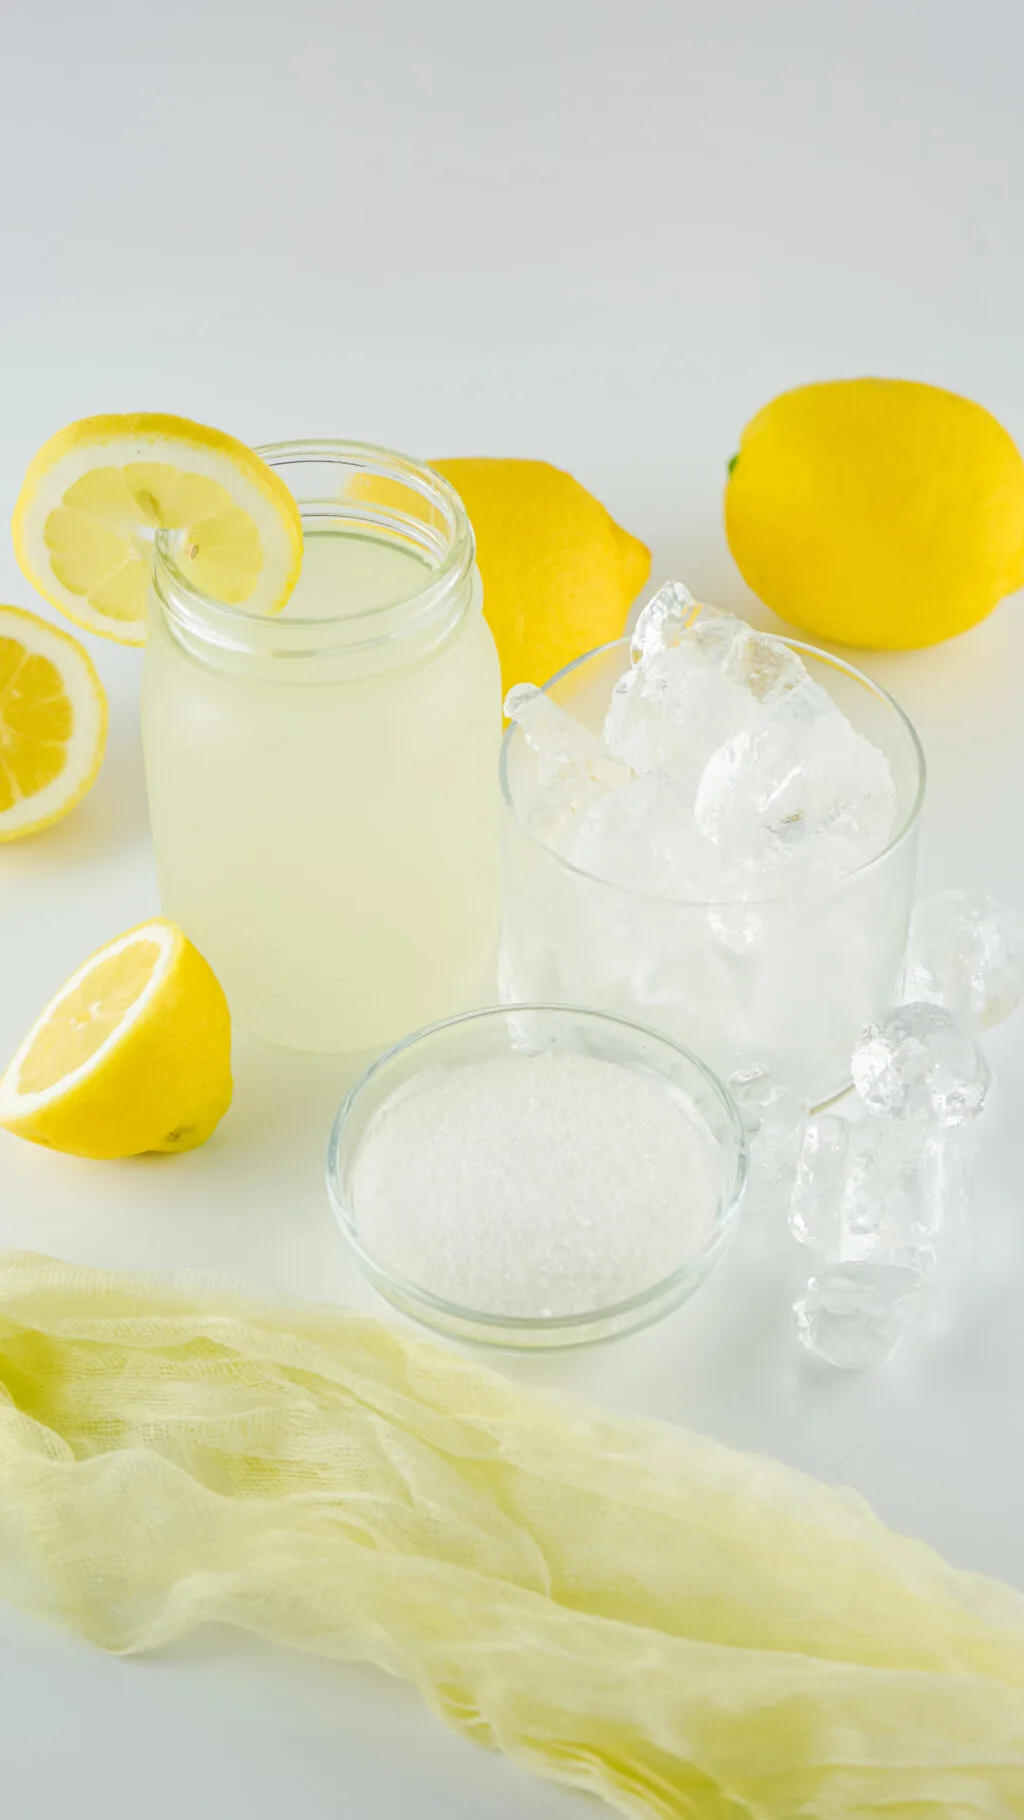 lemonade slushie ingredients in bowls on table